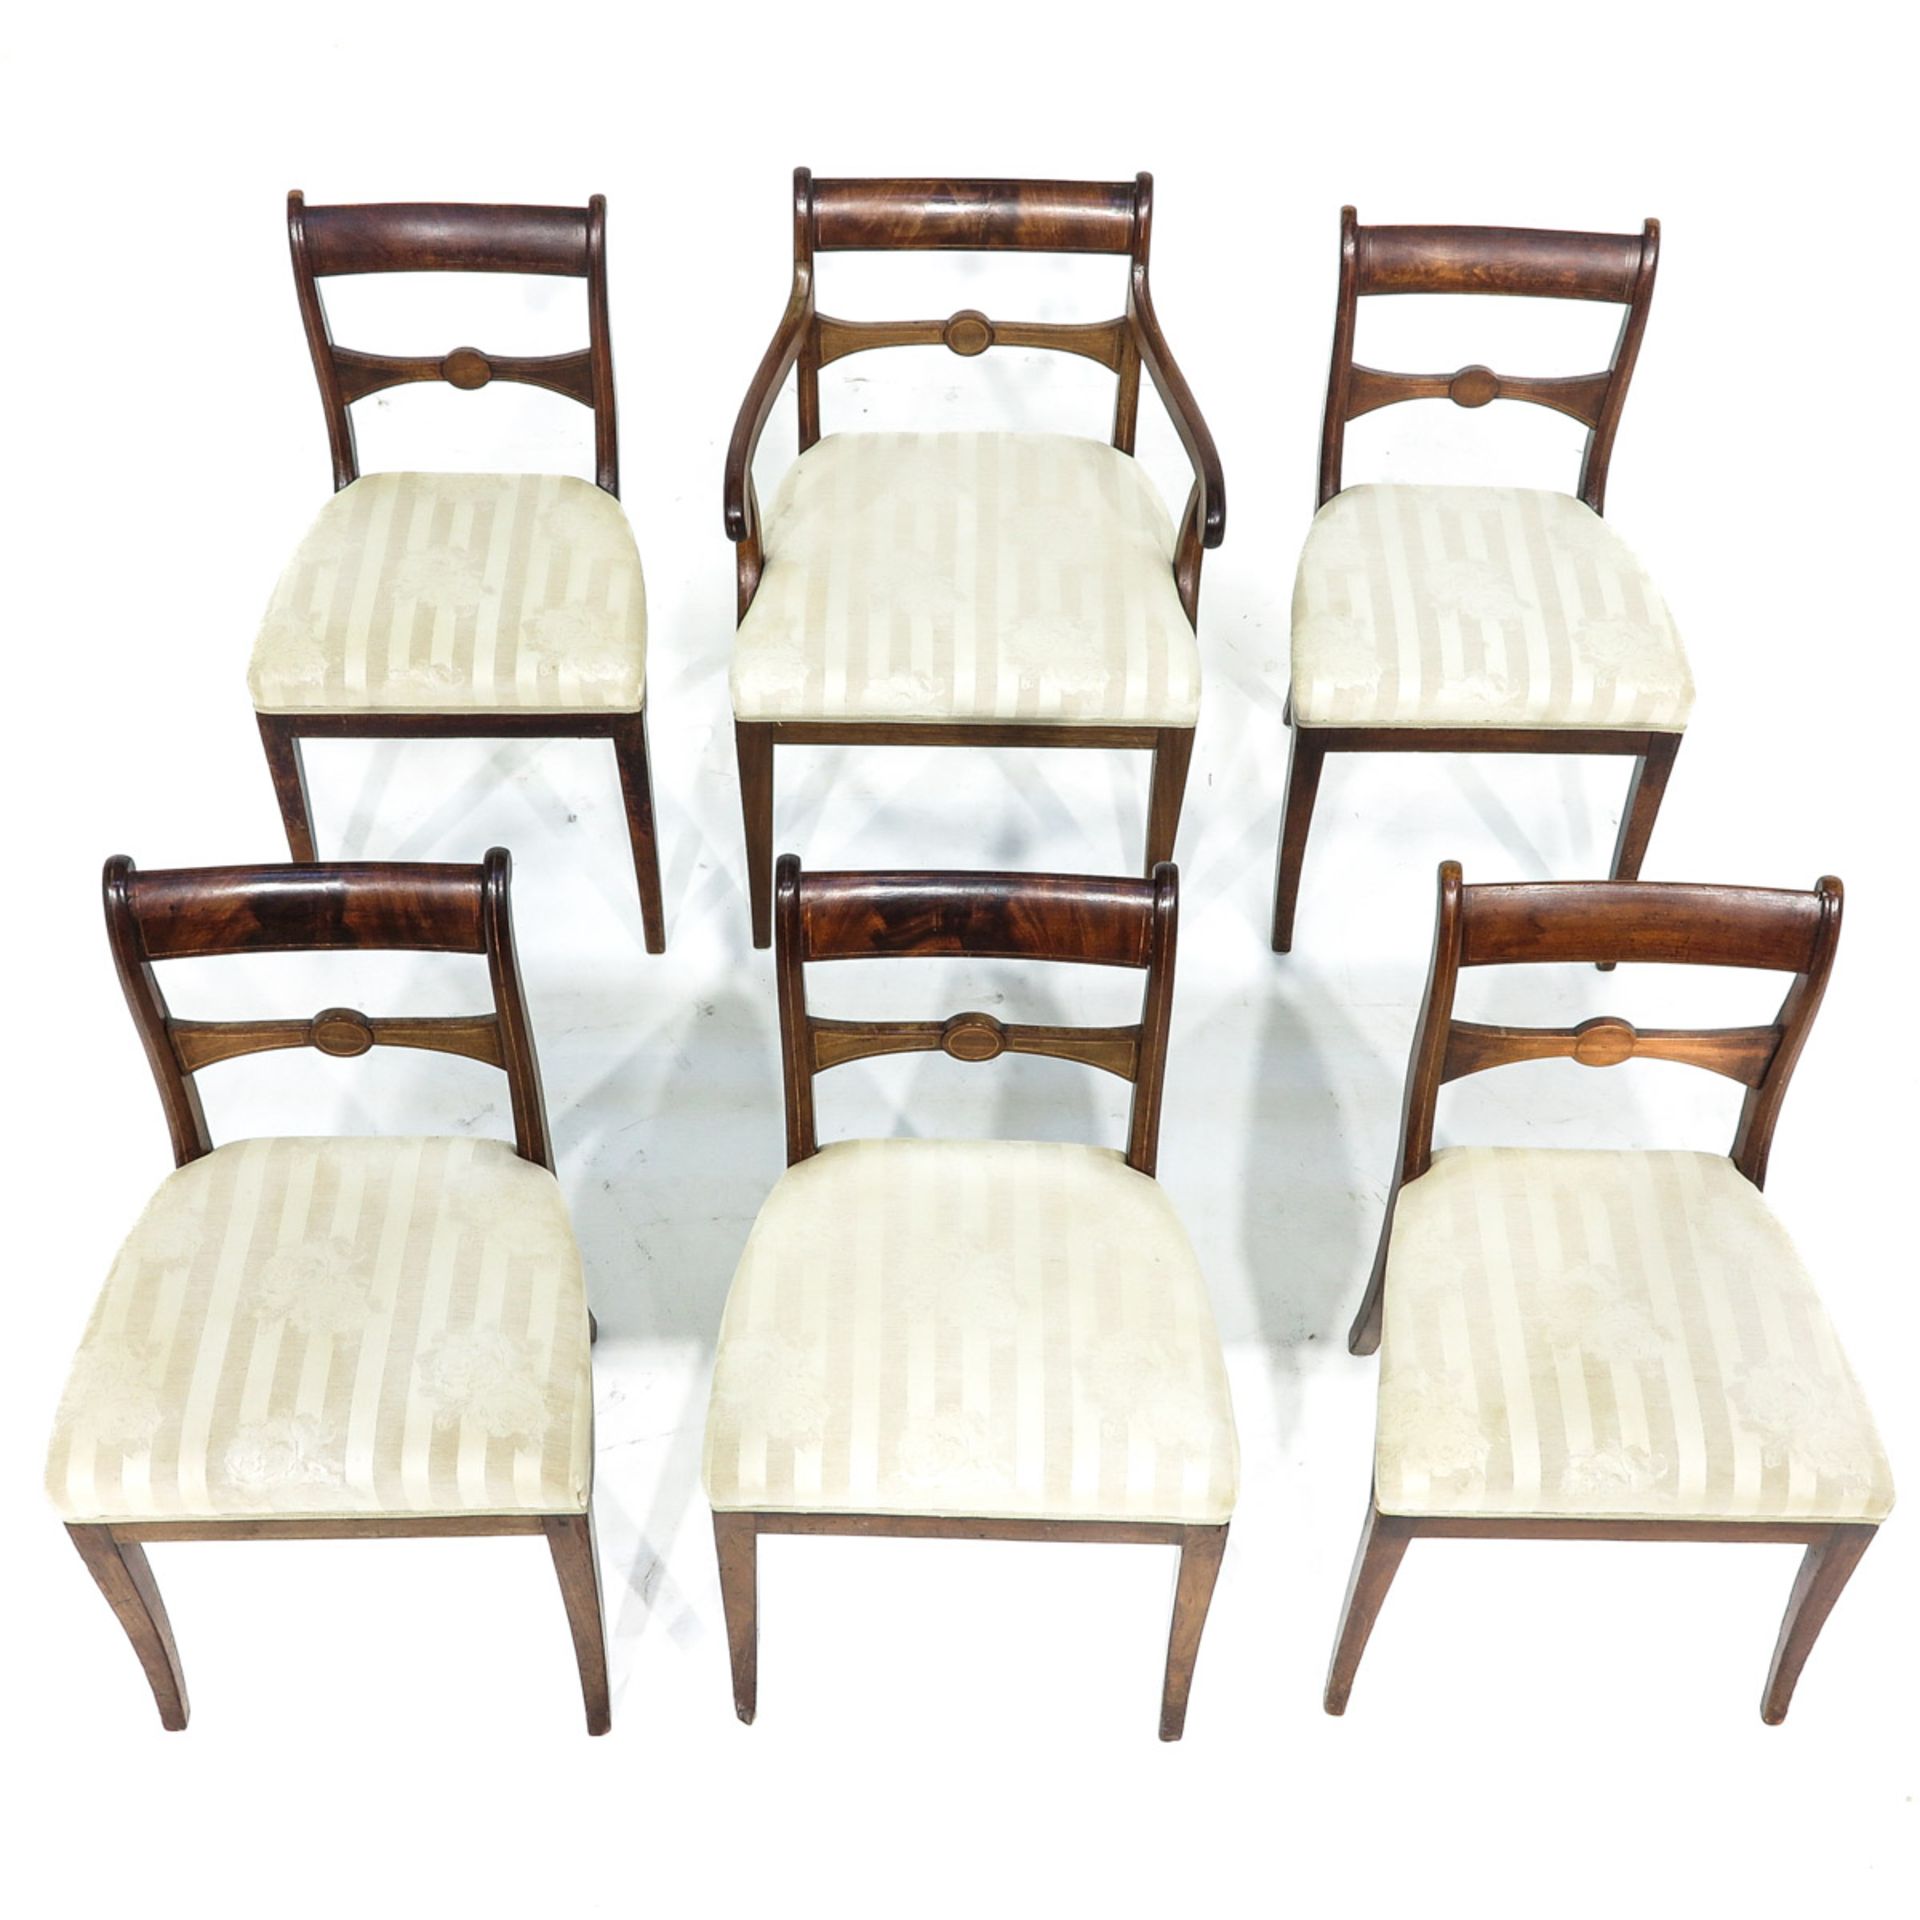 A Set of 6 19th Century English Mahogany Chairs - Image 5 of 9